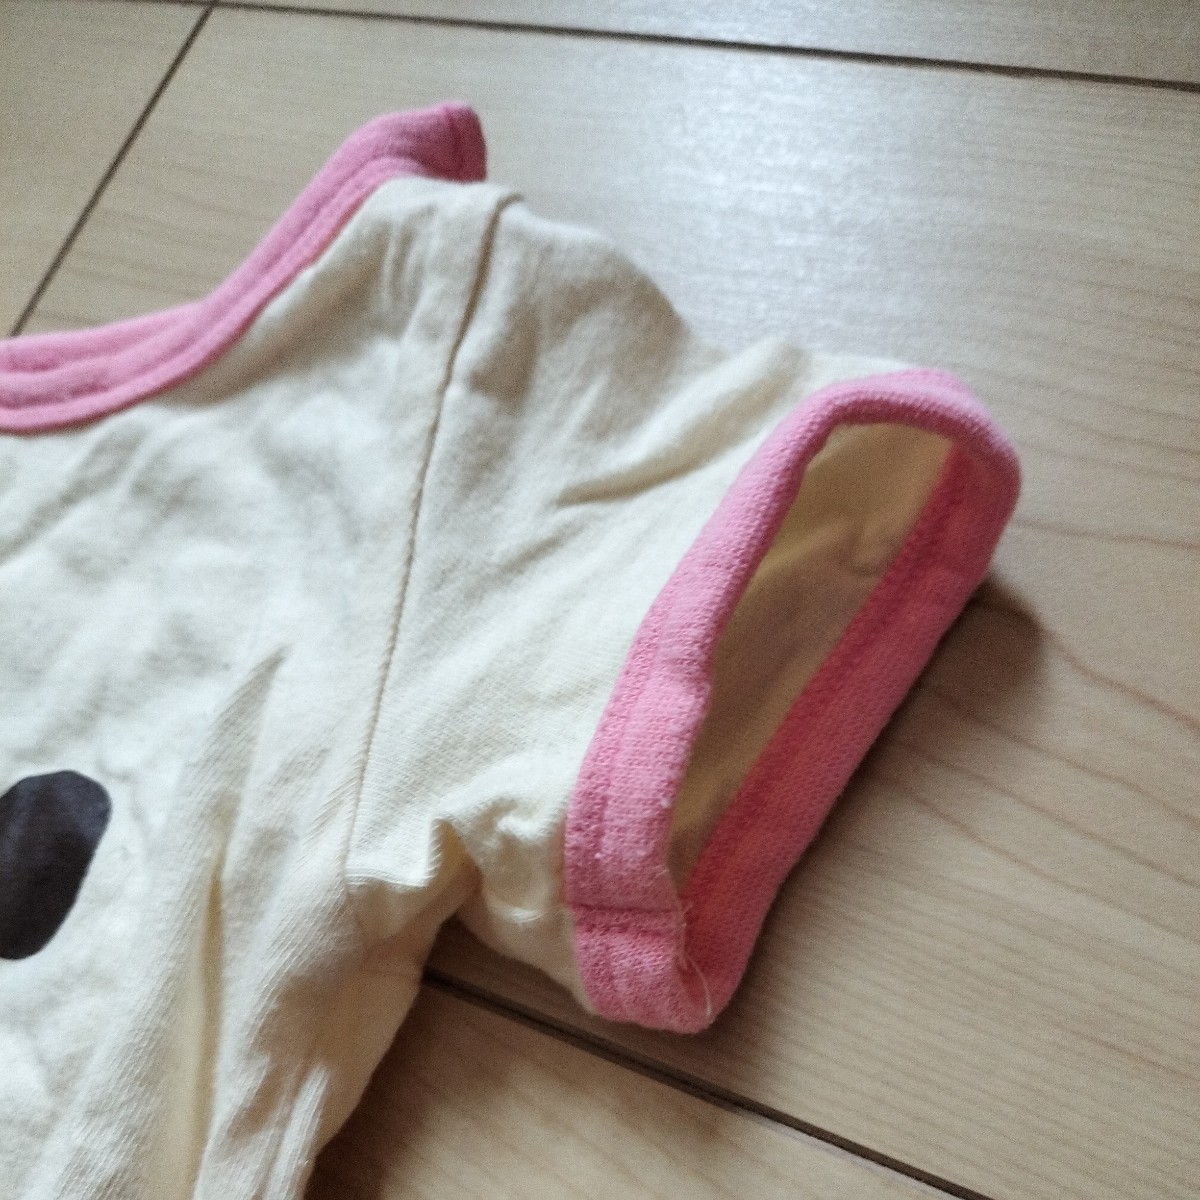 ko Rilakkuma размер 80 корпус рубашка детский комбинезон baby детский комбинезон боди Rilakkuma короткий рукав 